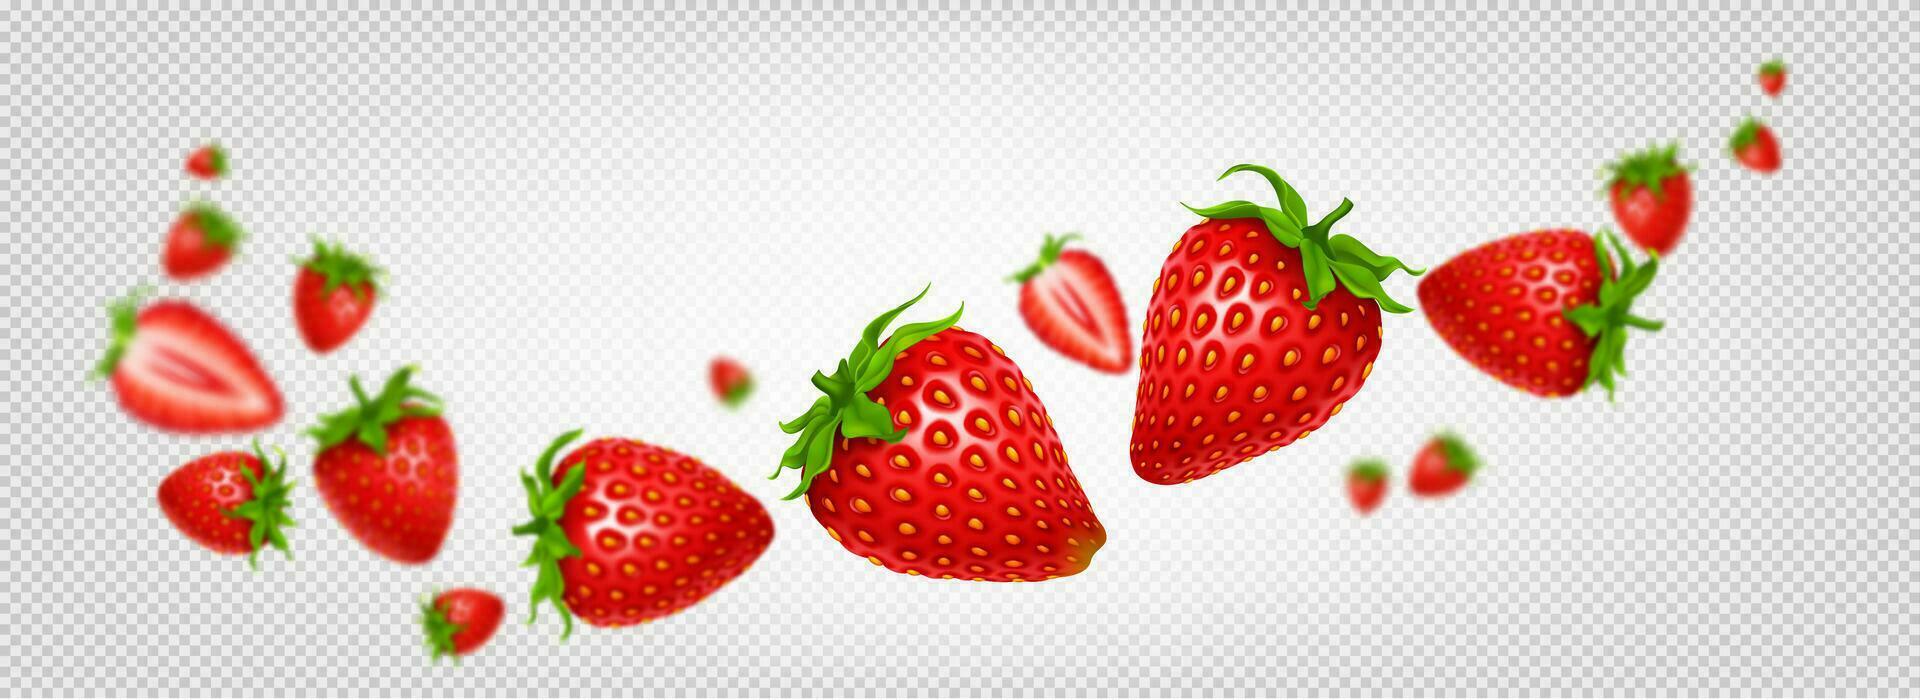 3d isoliert Vektor Erdbeere Obst Scheibe Welle